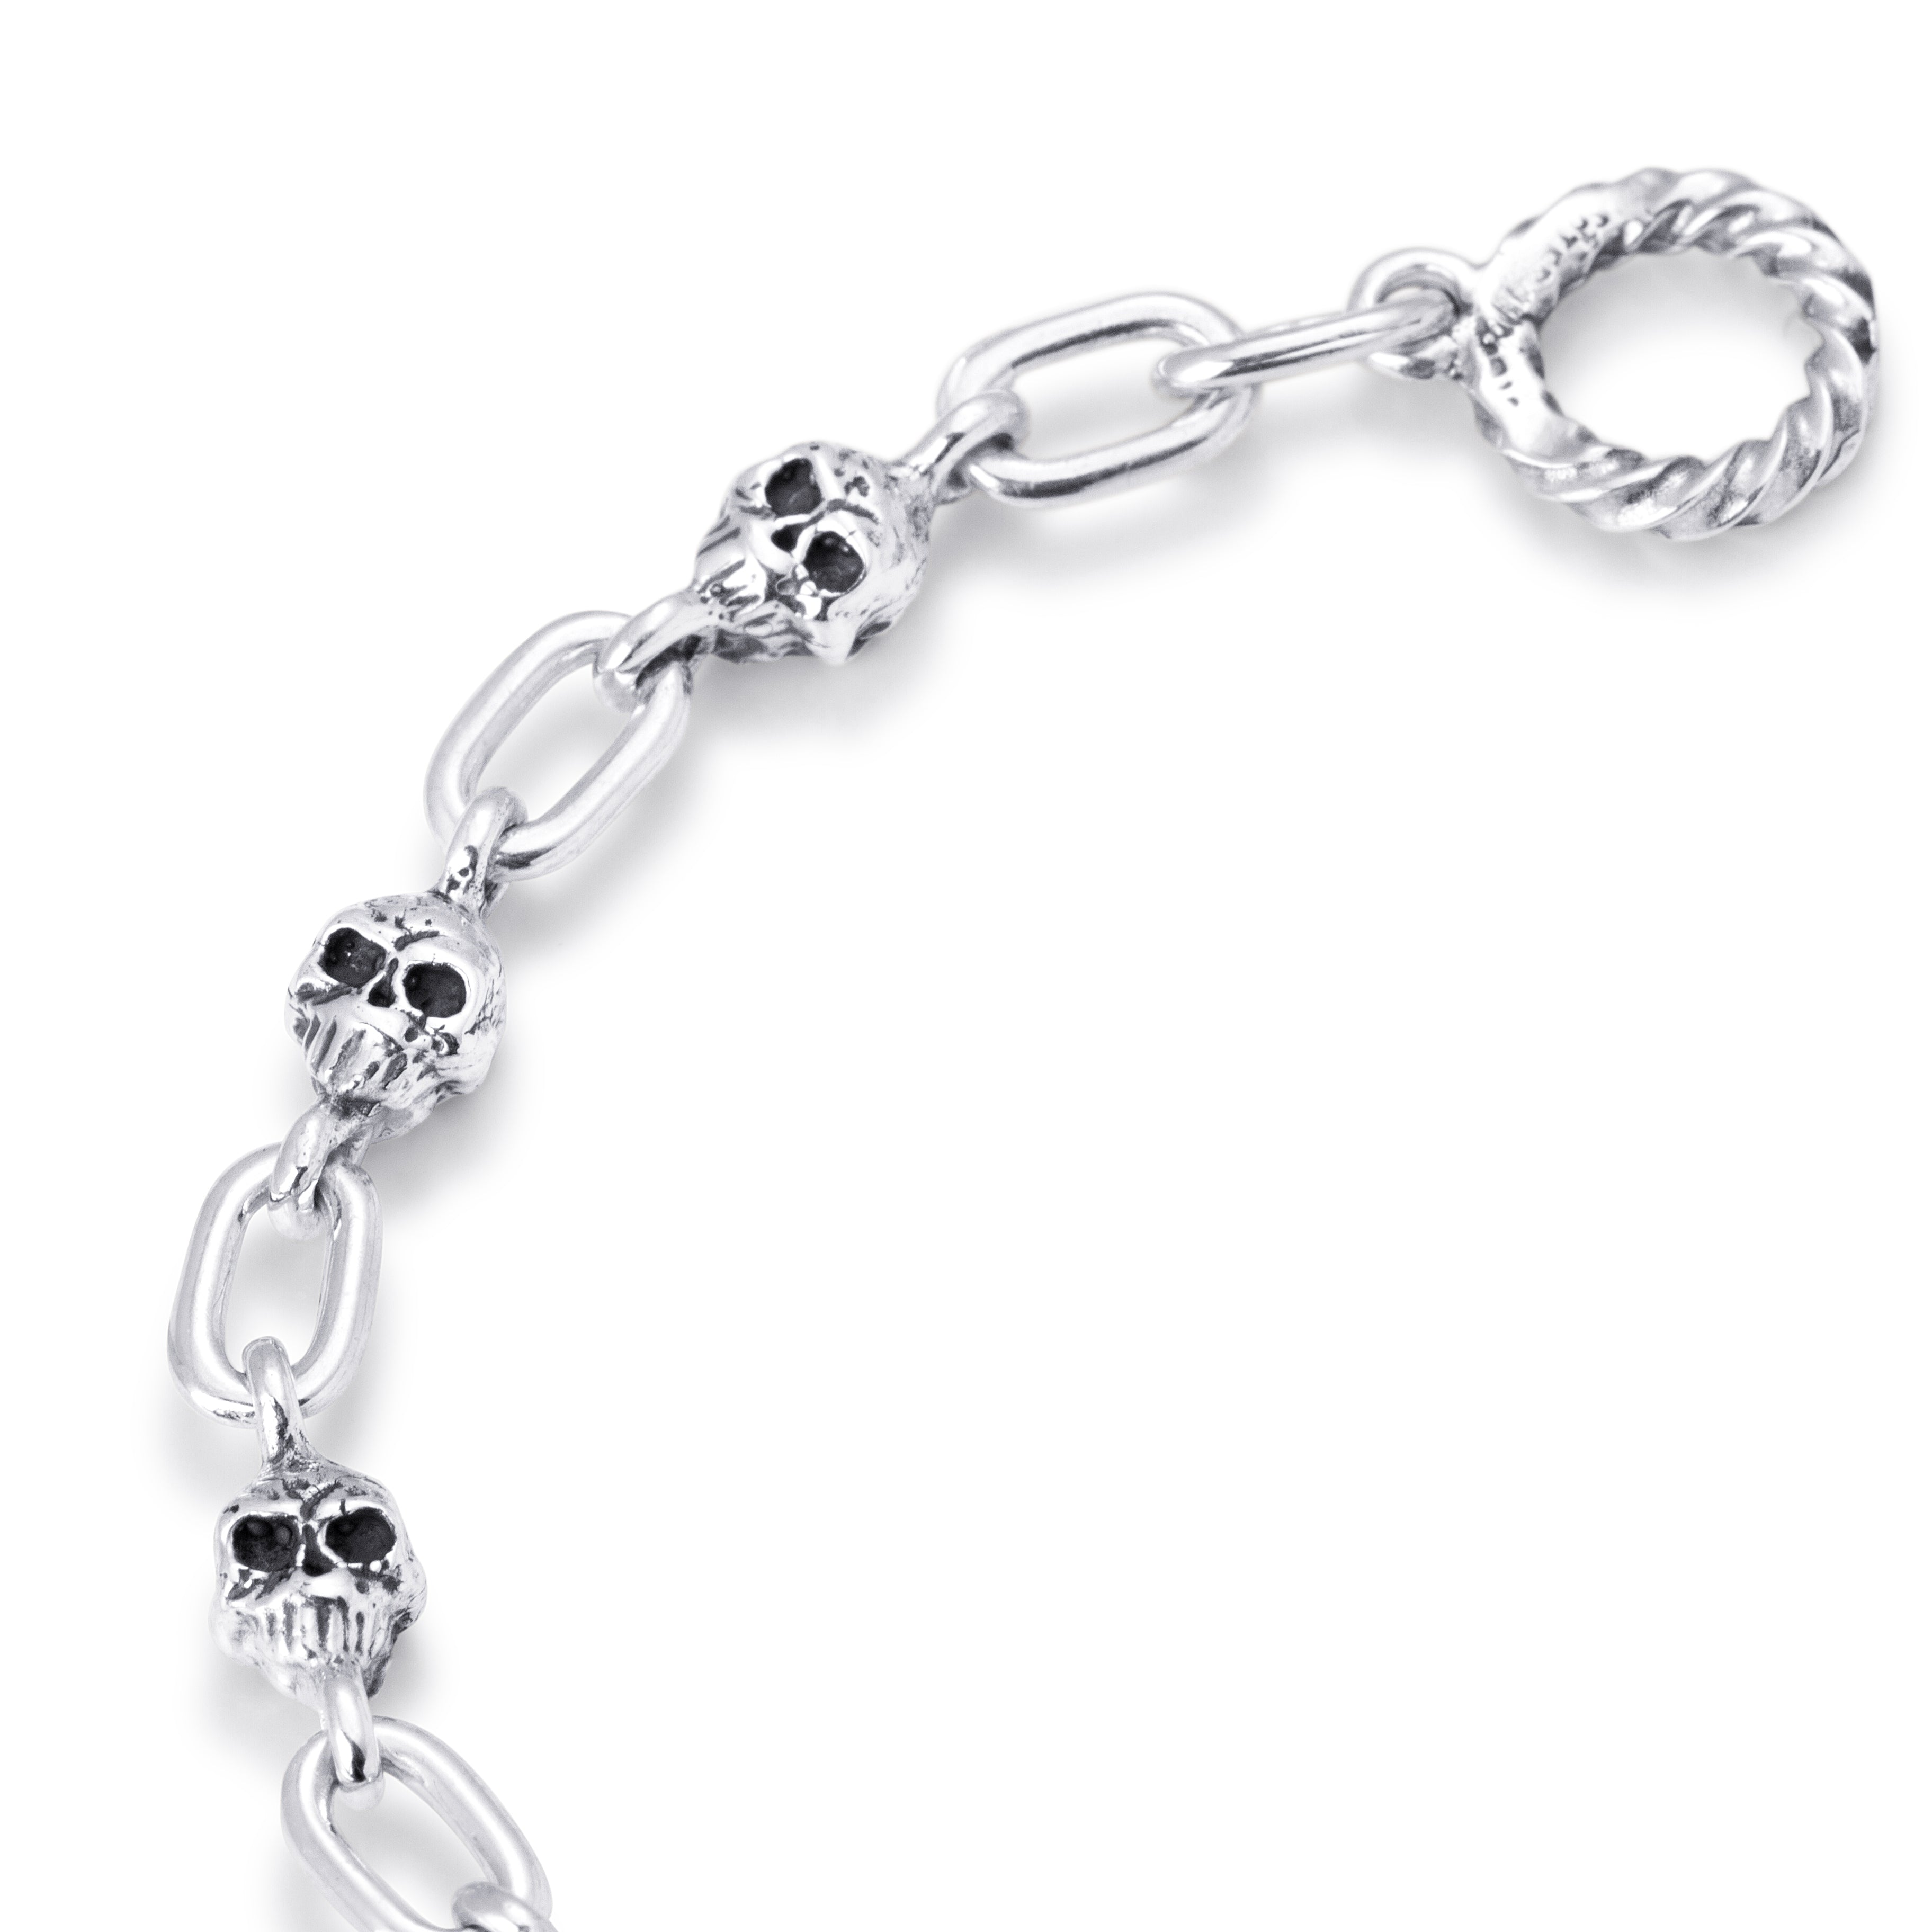 Small Skull Link Chain Bracelet in Sterling Silver, 5mm